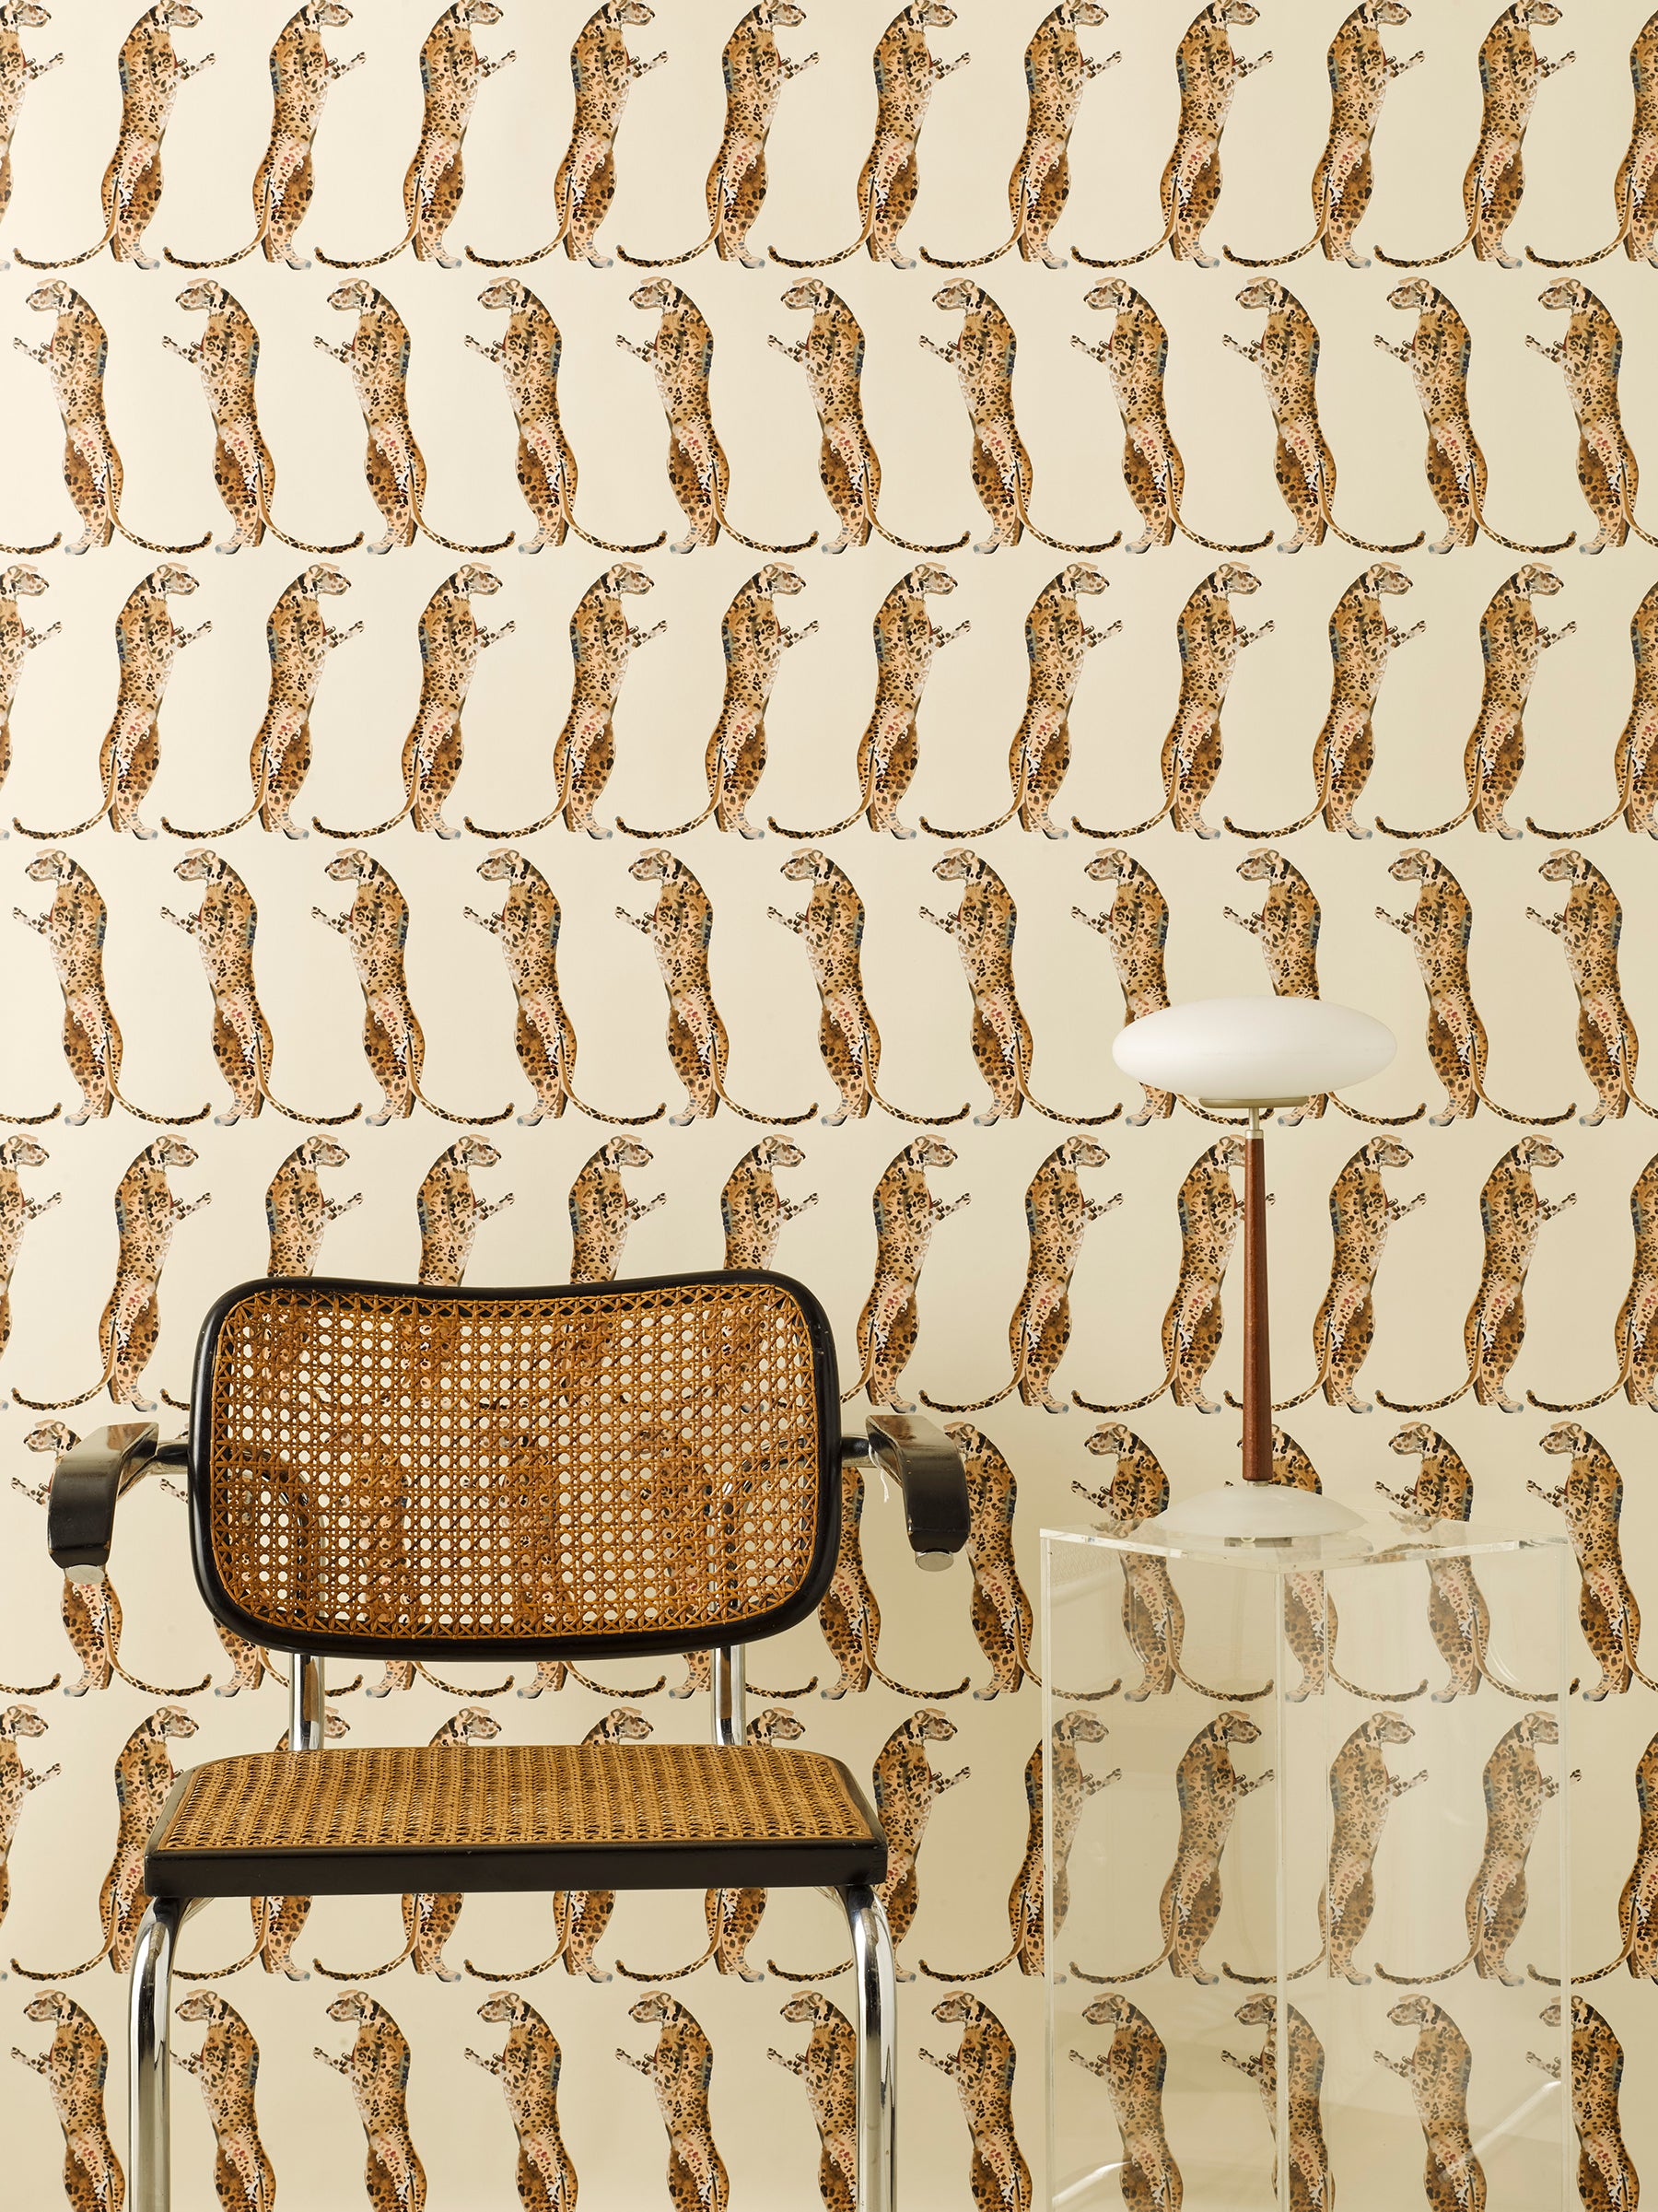 RoomMates Cheetah Cheetah Peel and Stick Wallpaper - Whites